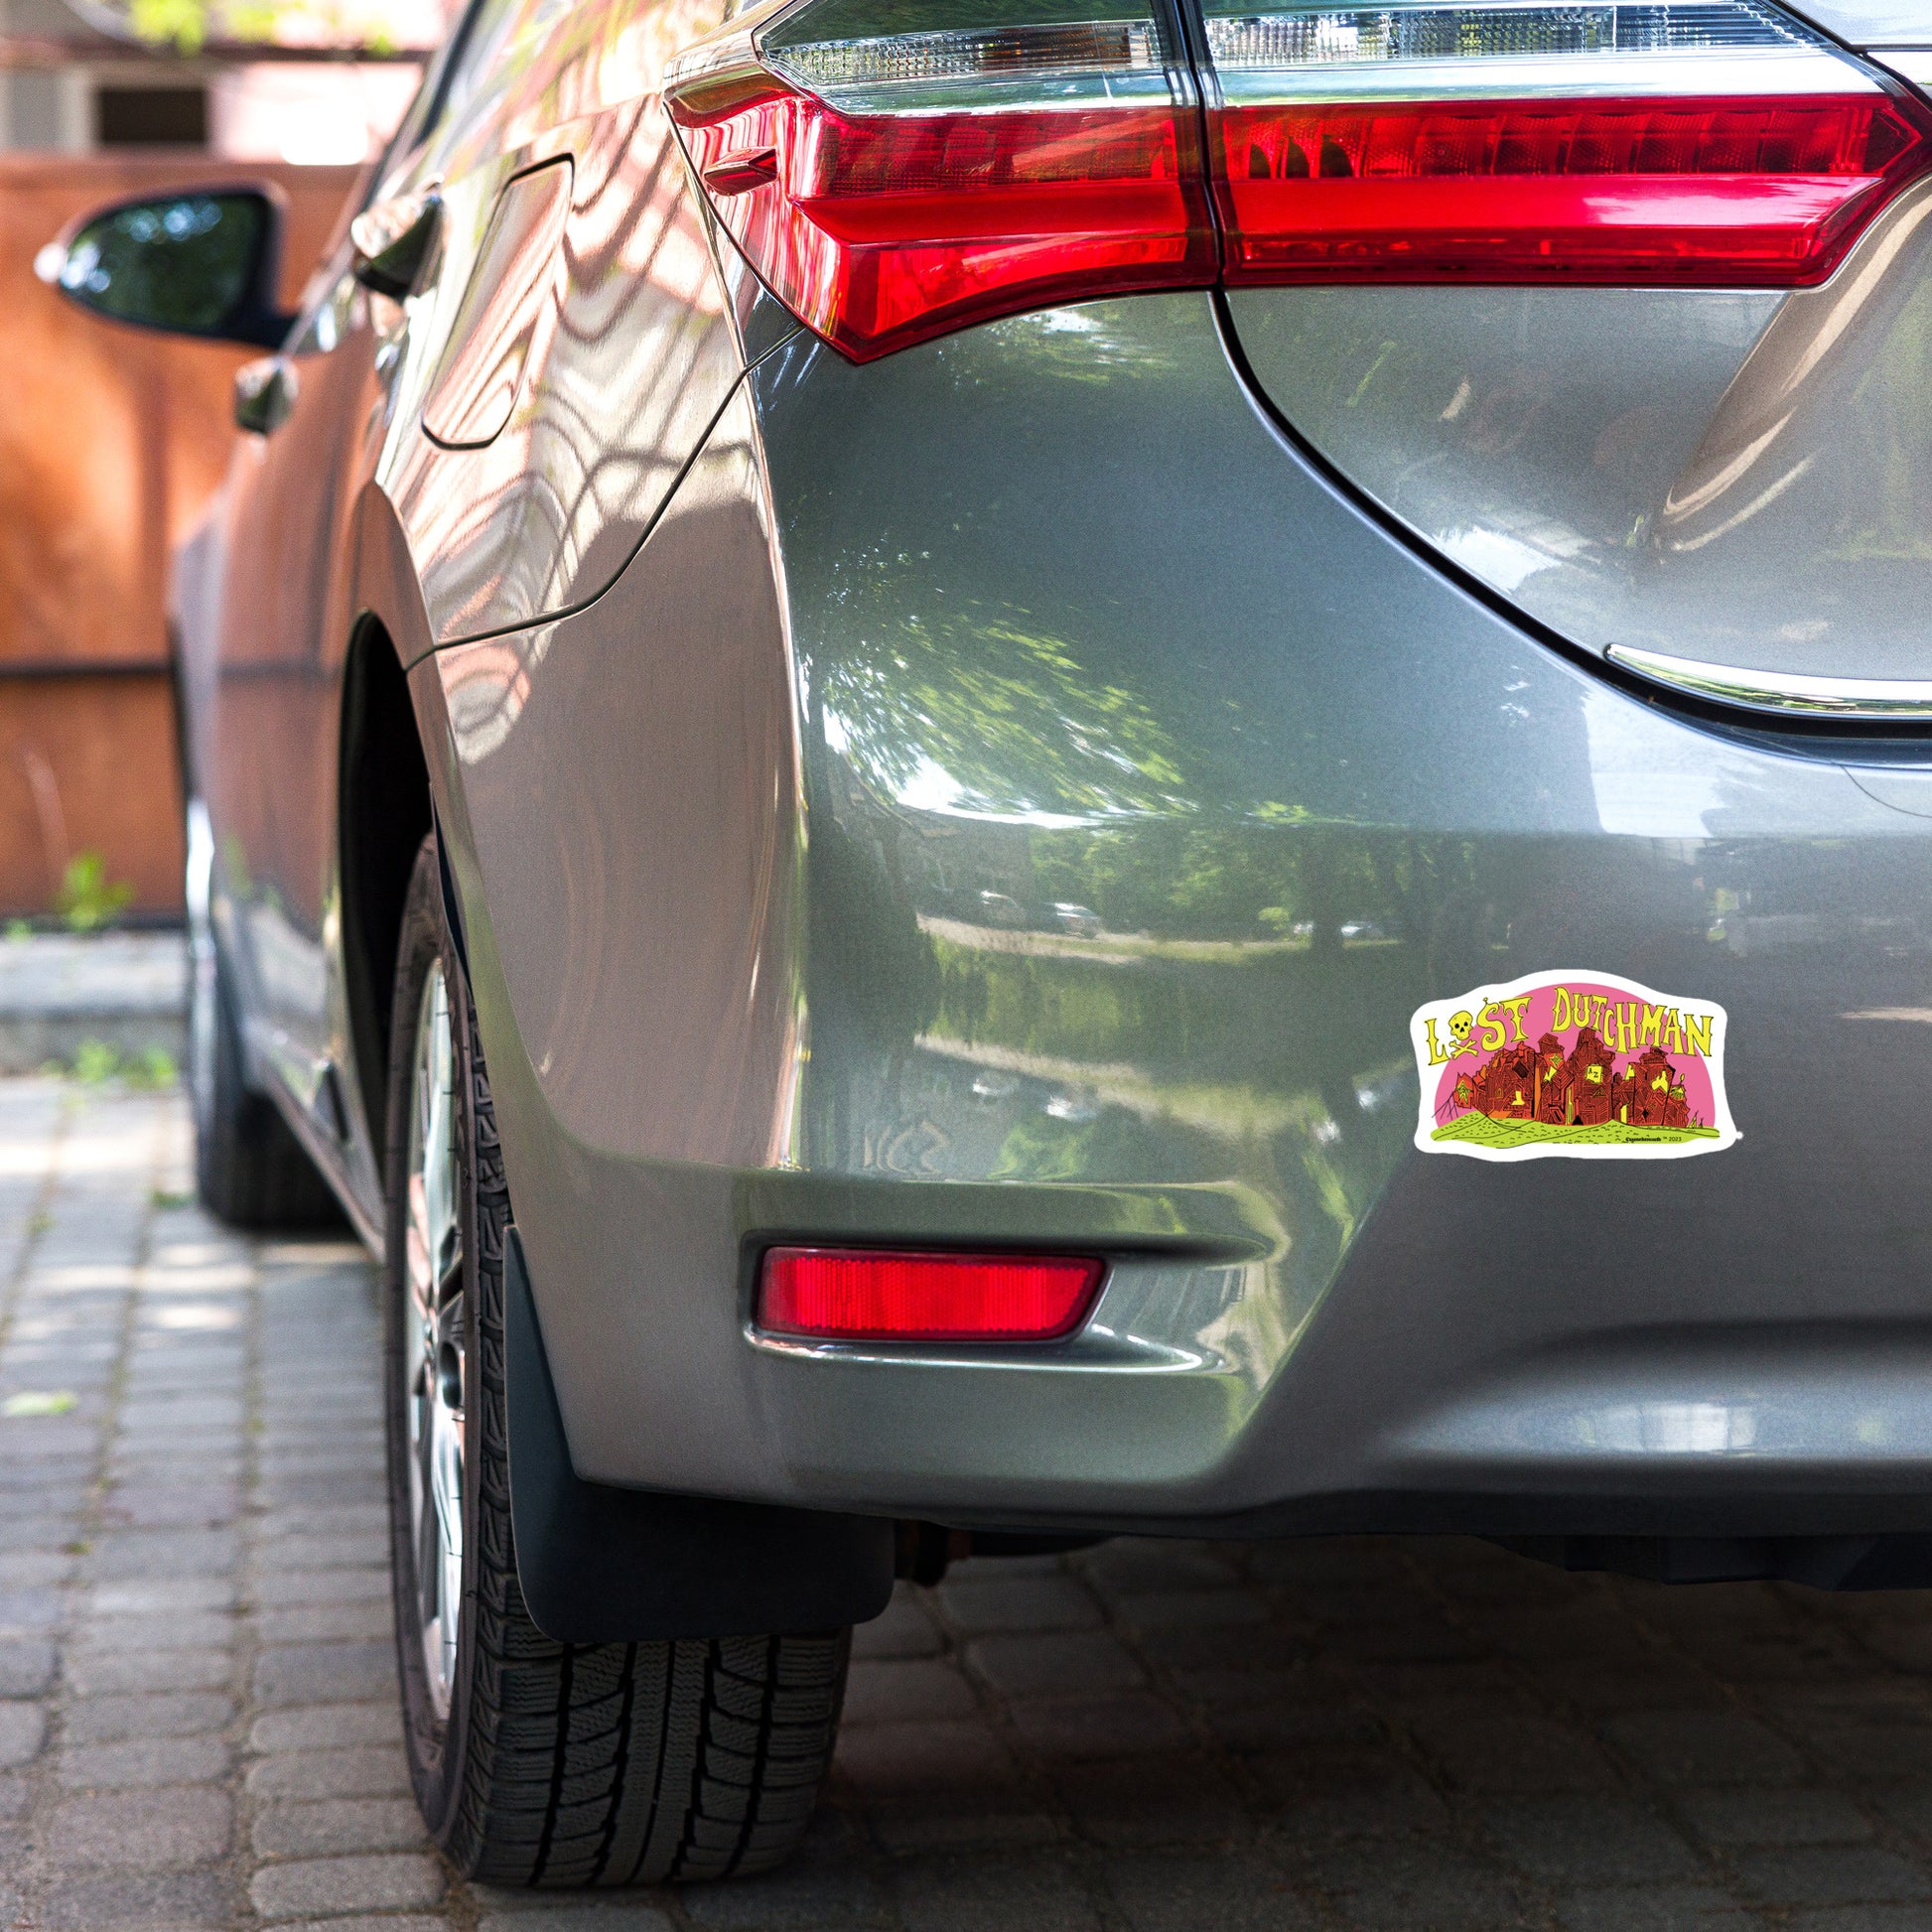 lost dutchman state park mesa az vinyl sticker displayed on rear bumper of car